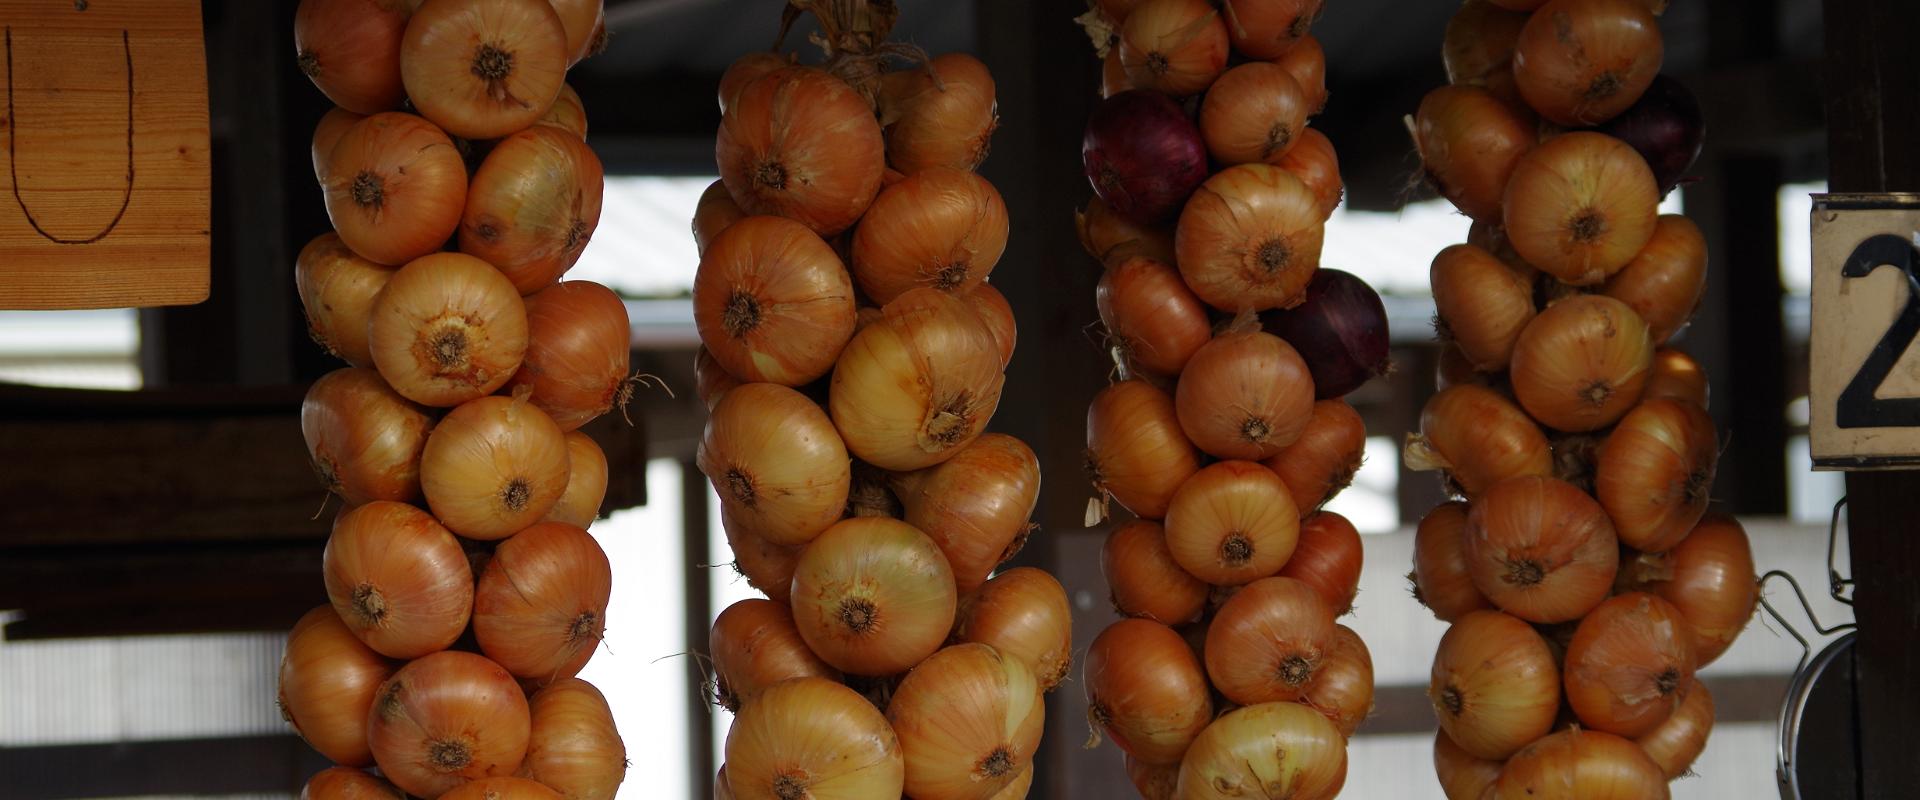 Tartu Market, hanging onion wreaths